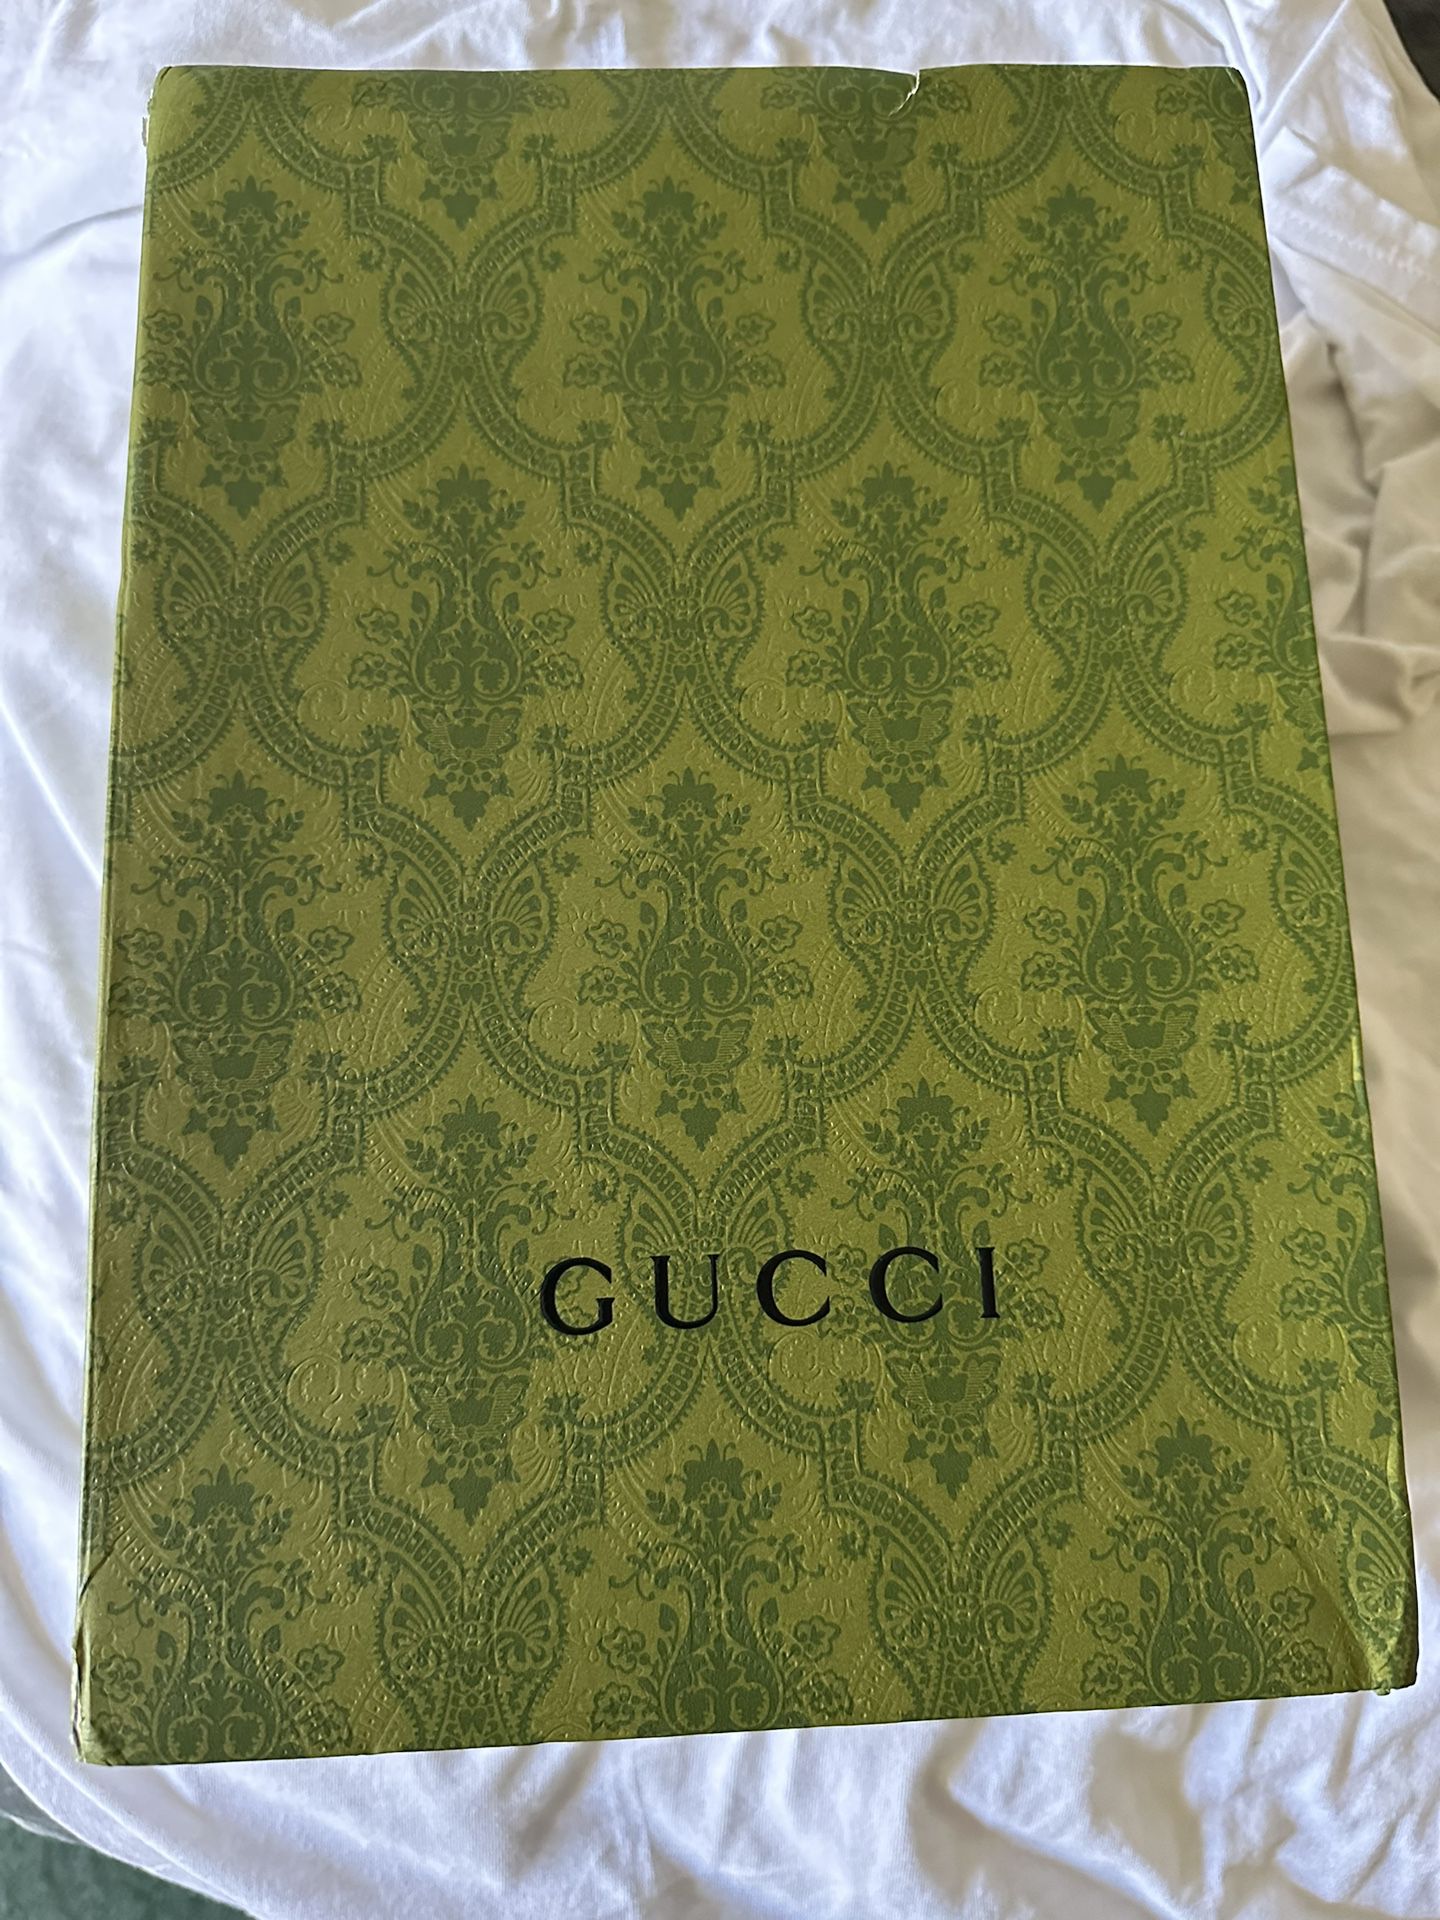 New Gucci Messenger Bag !!